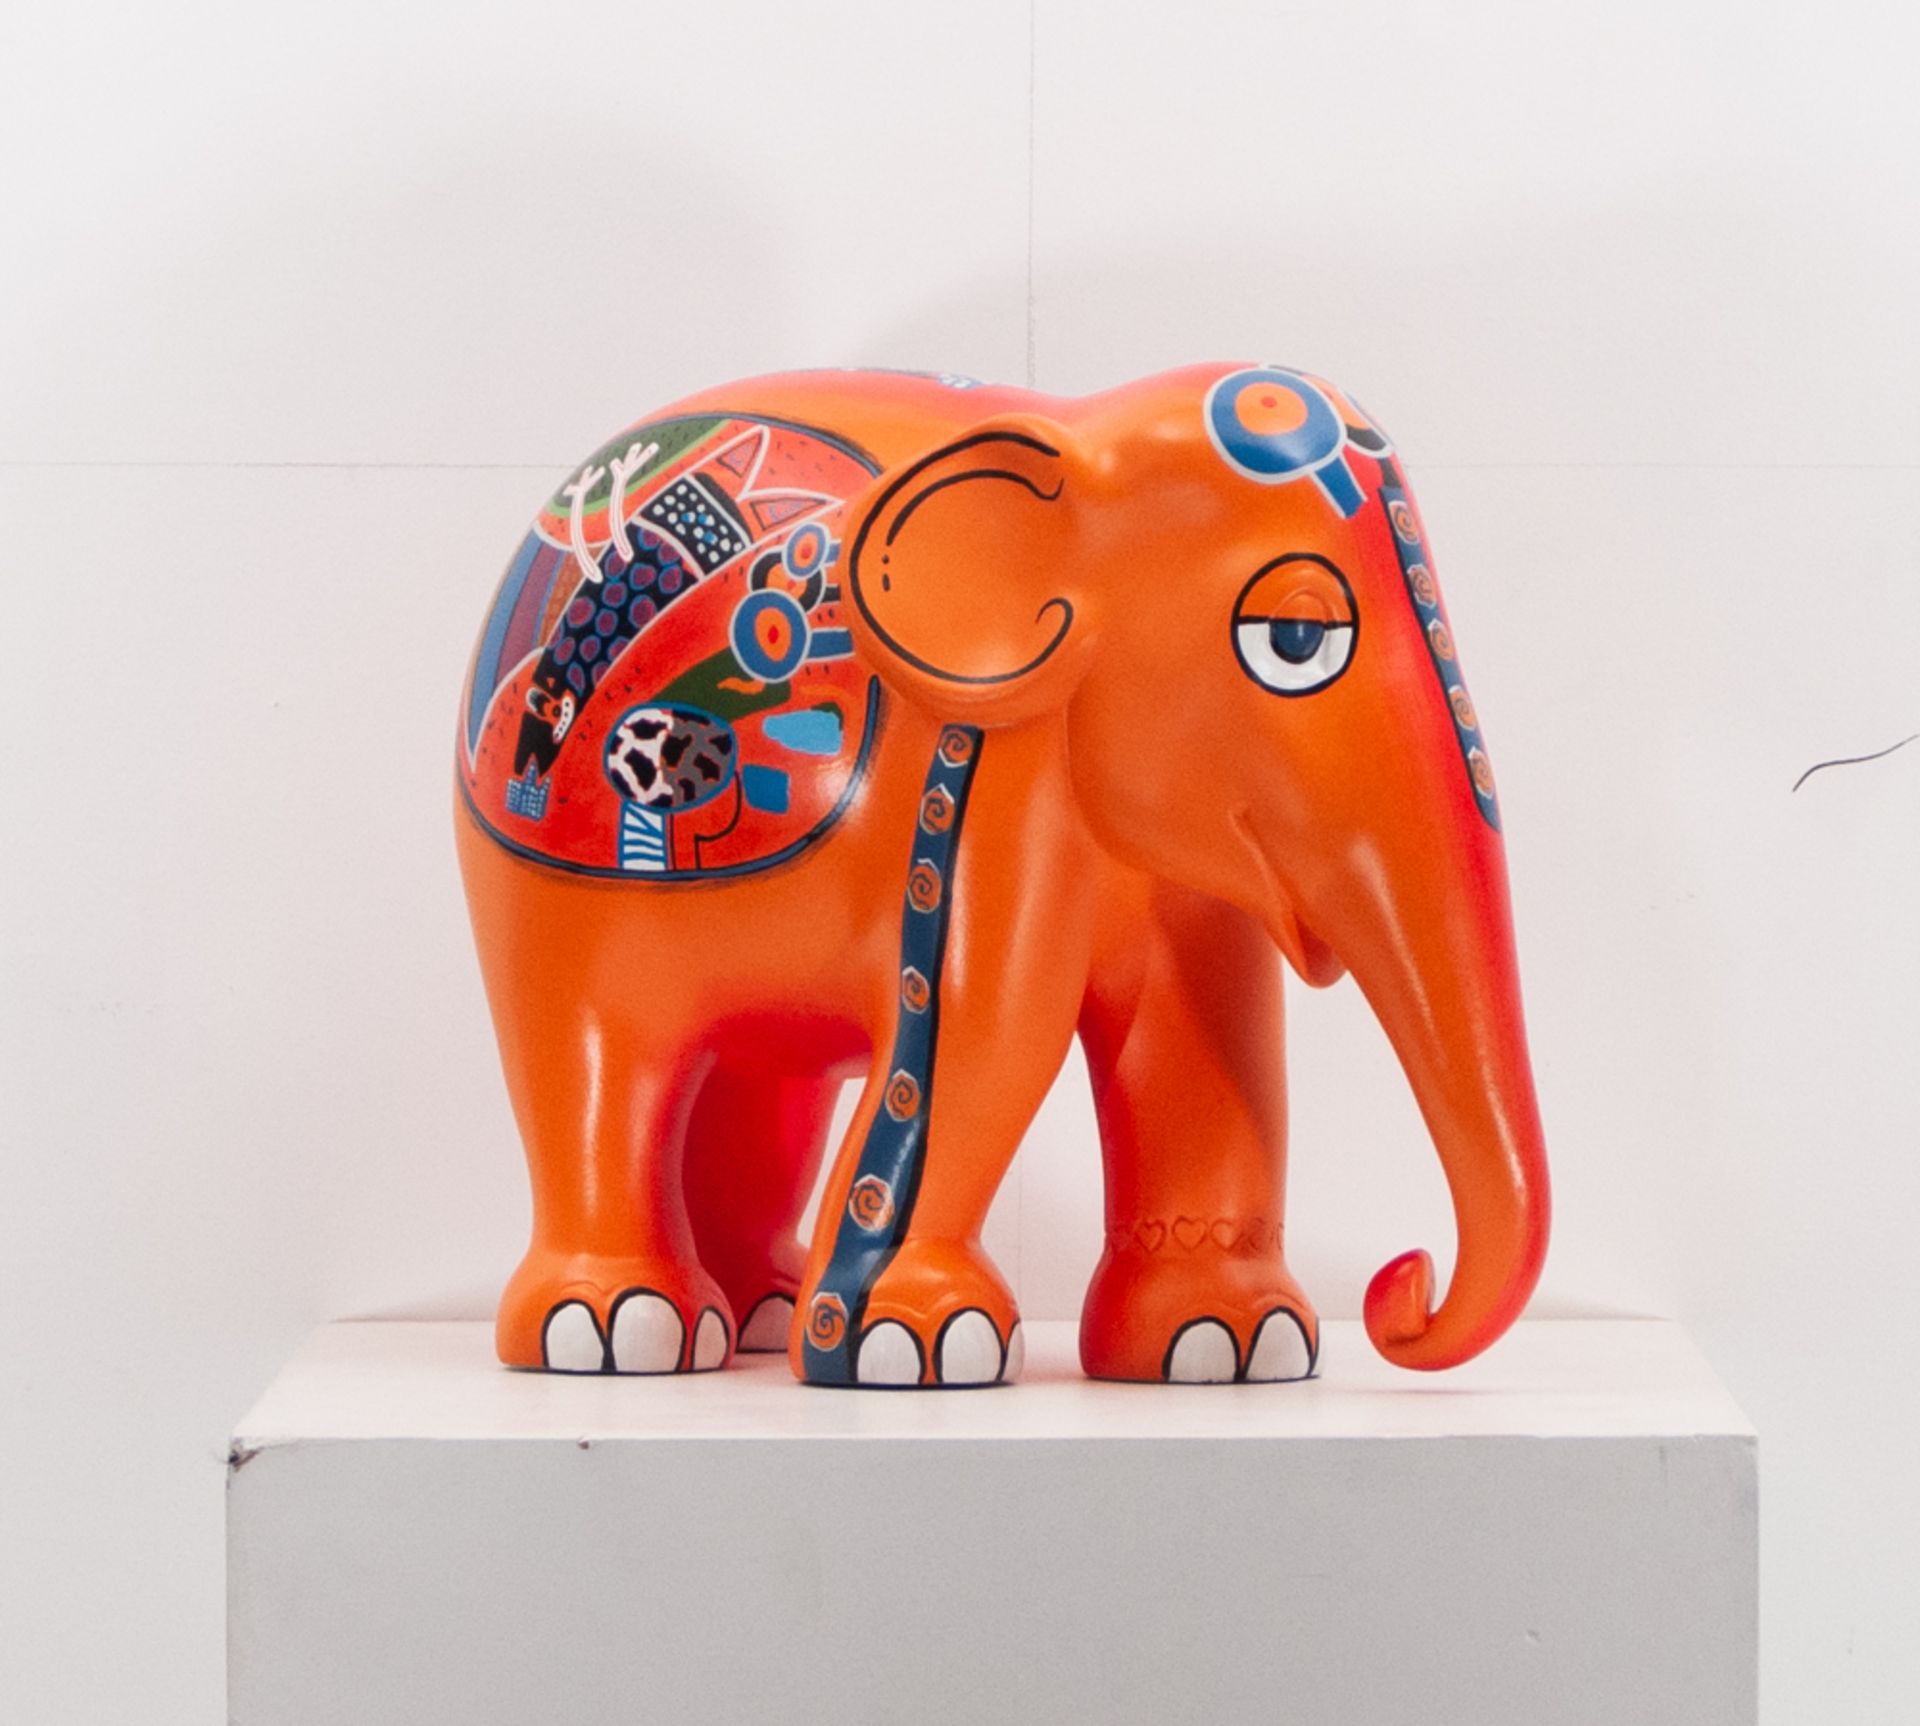 Guillaume Corneille van Beverloo (1922 - 2010) Plastic sculpture by Guillaume Corneille, ** Elephant